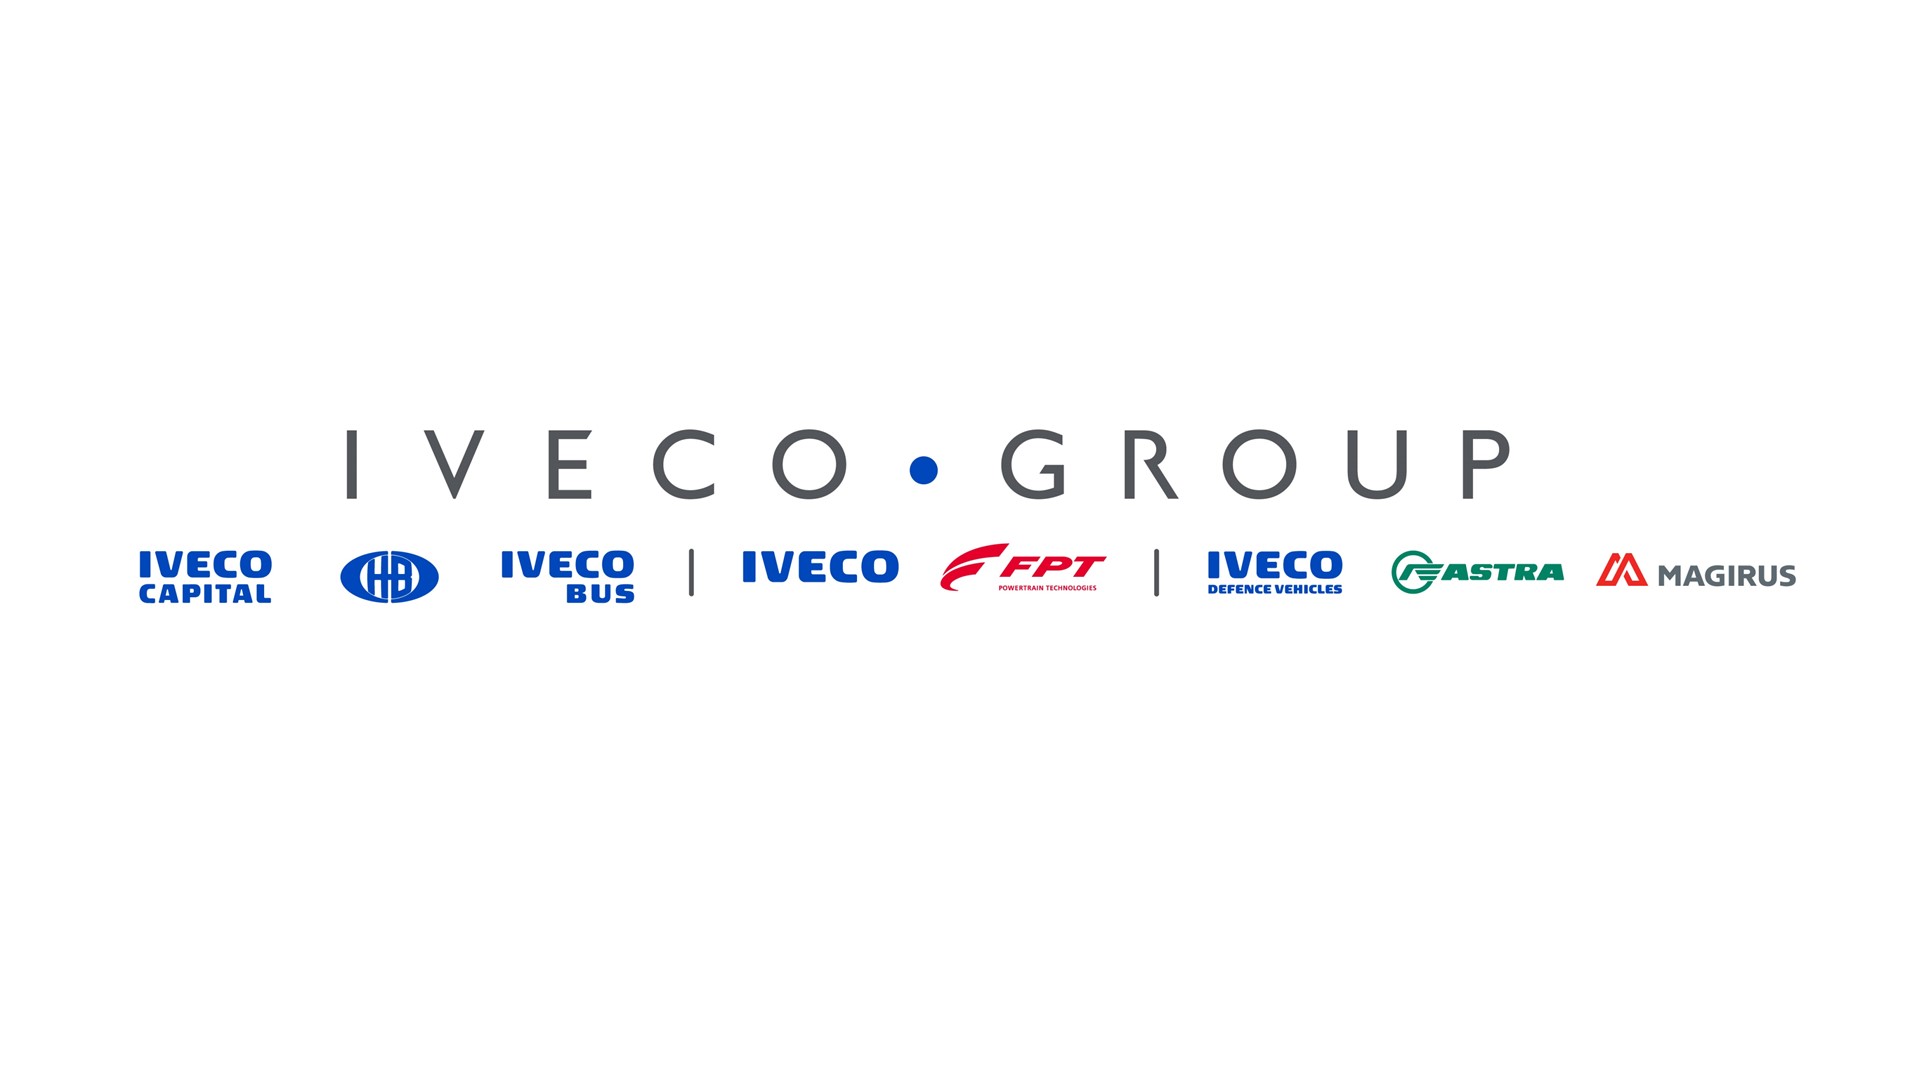 IVECO GROUP LOGO for LARGE ROTATOR PANEL